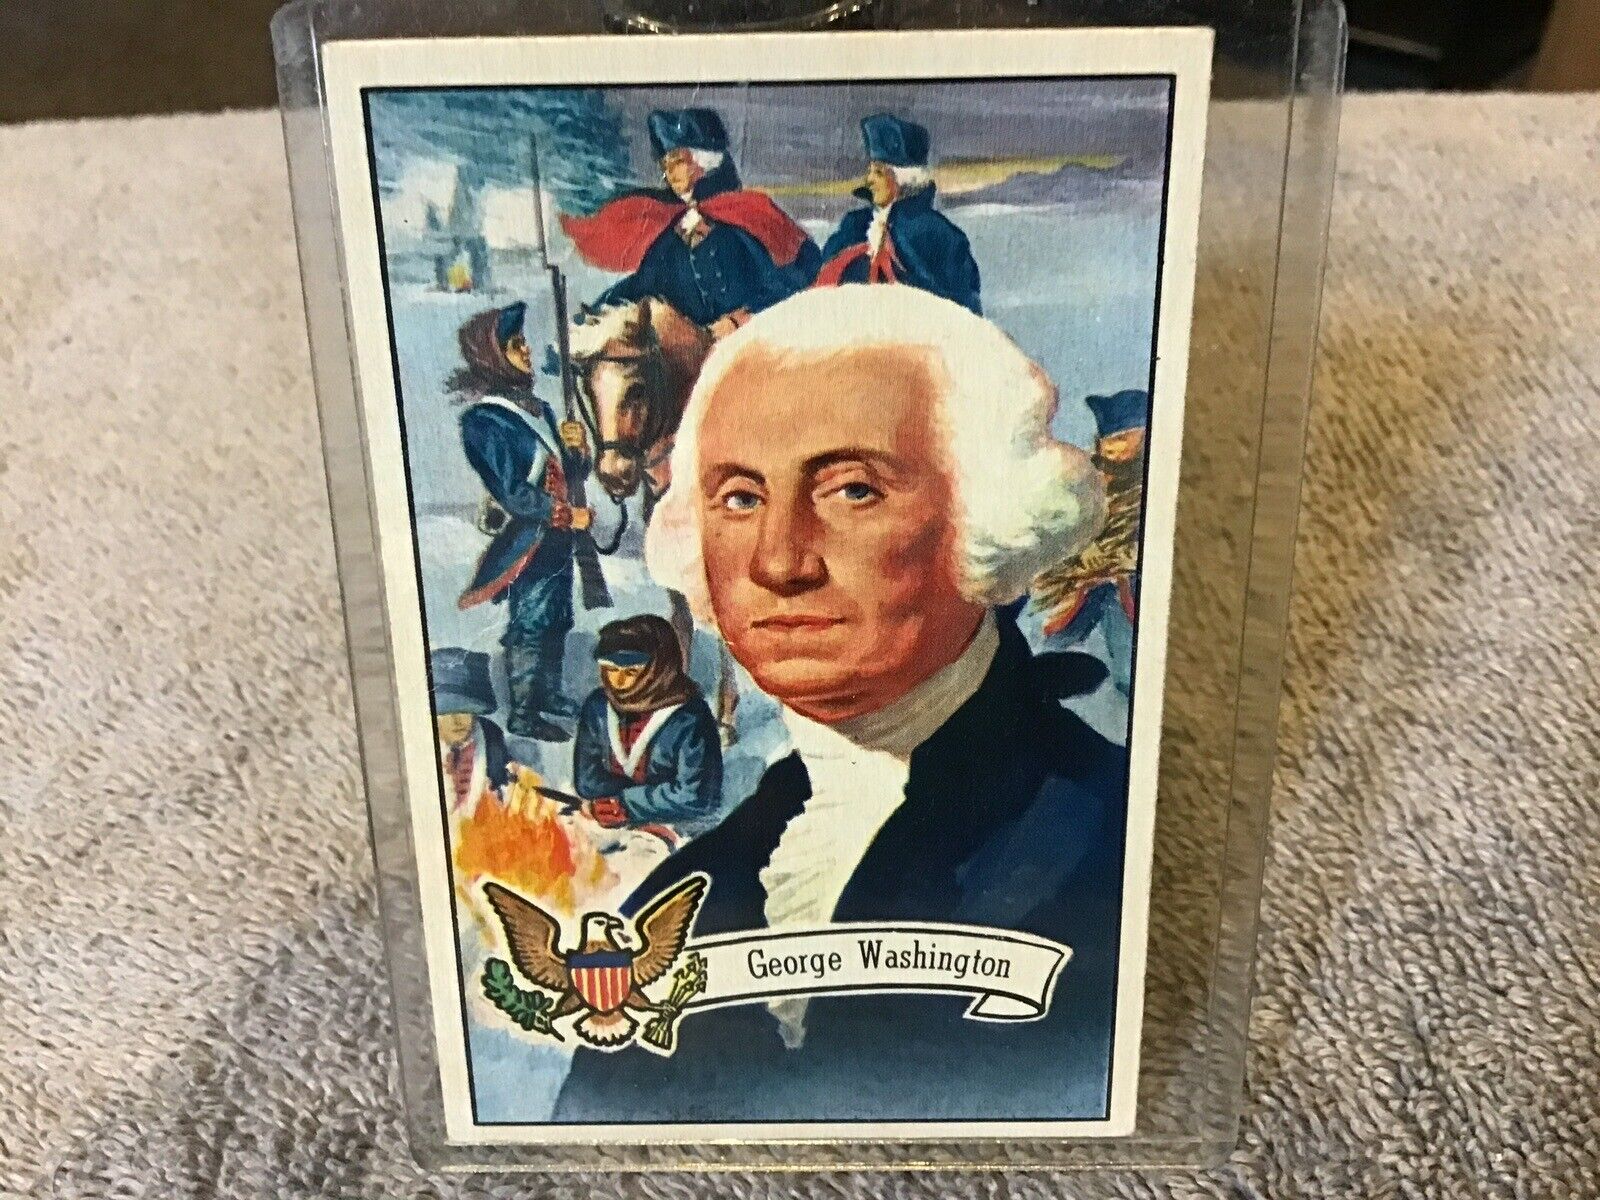 1952 BowmanU.S. Presidents George Washington 1st President Card #1 Light Creases